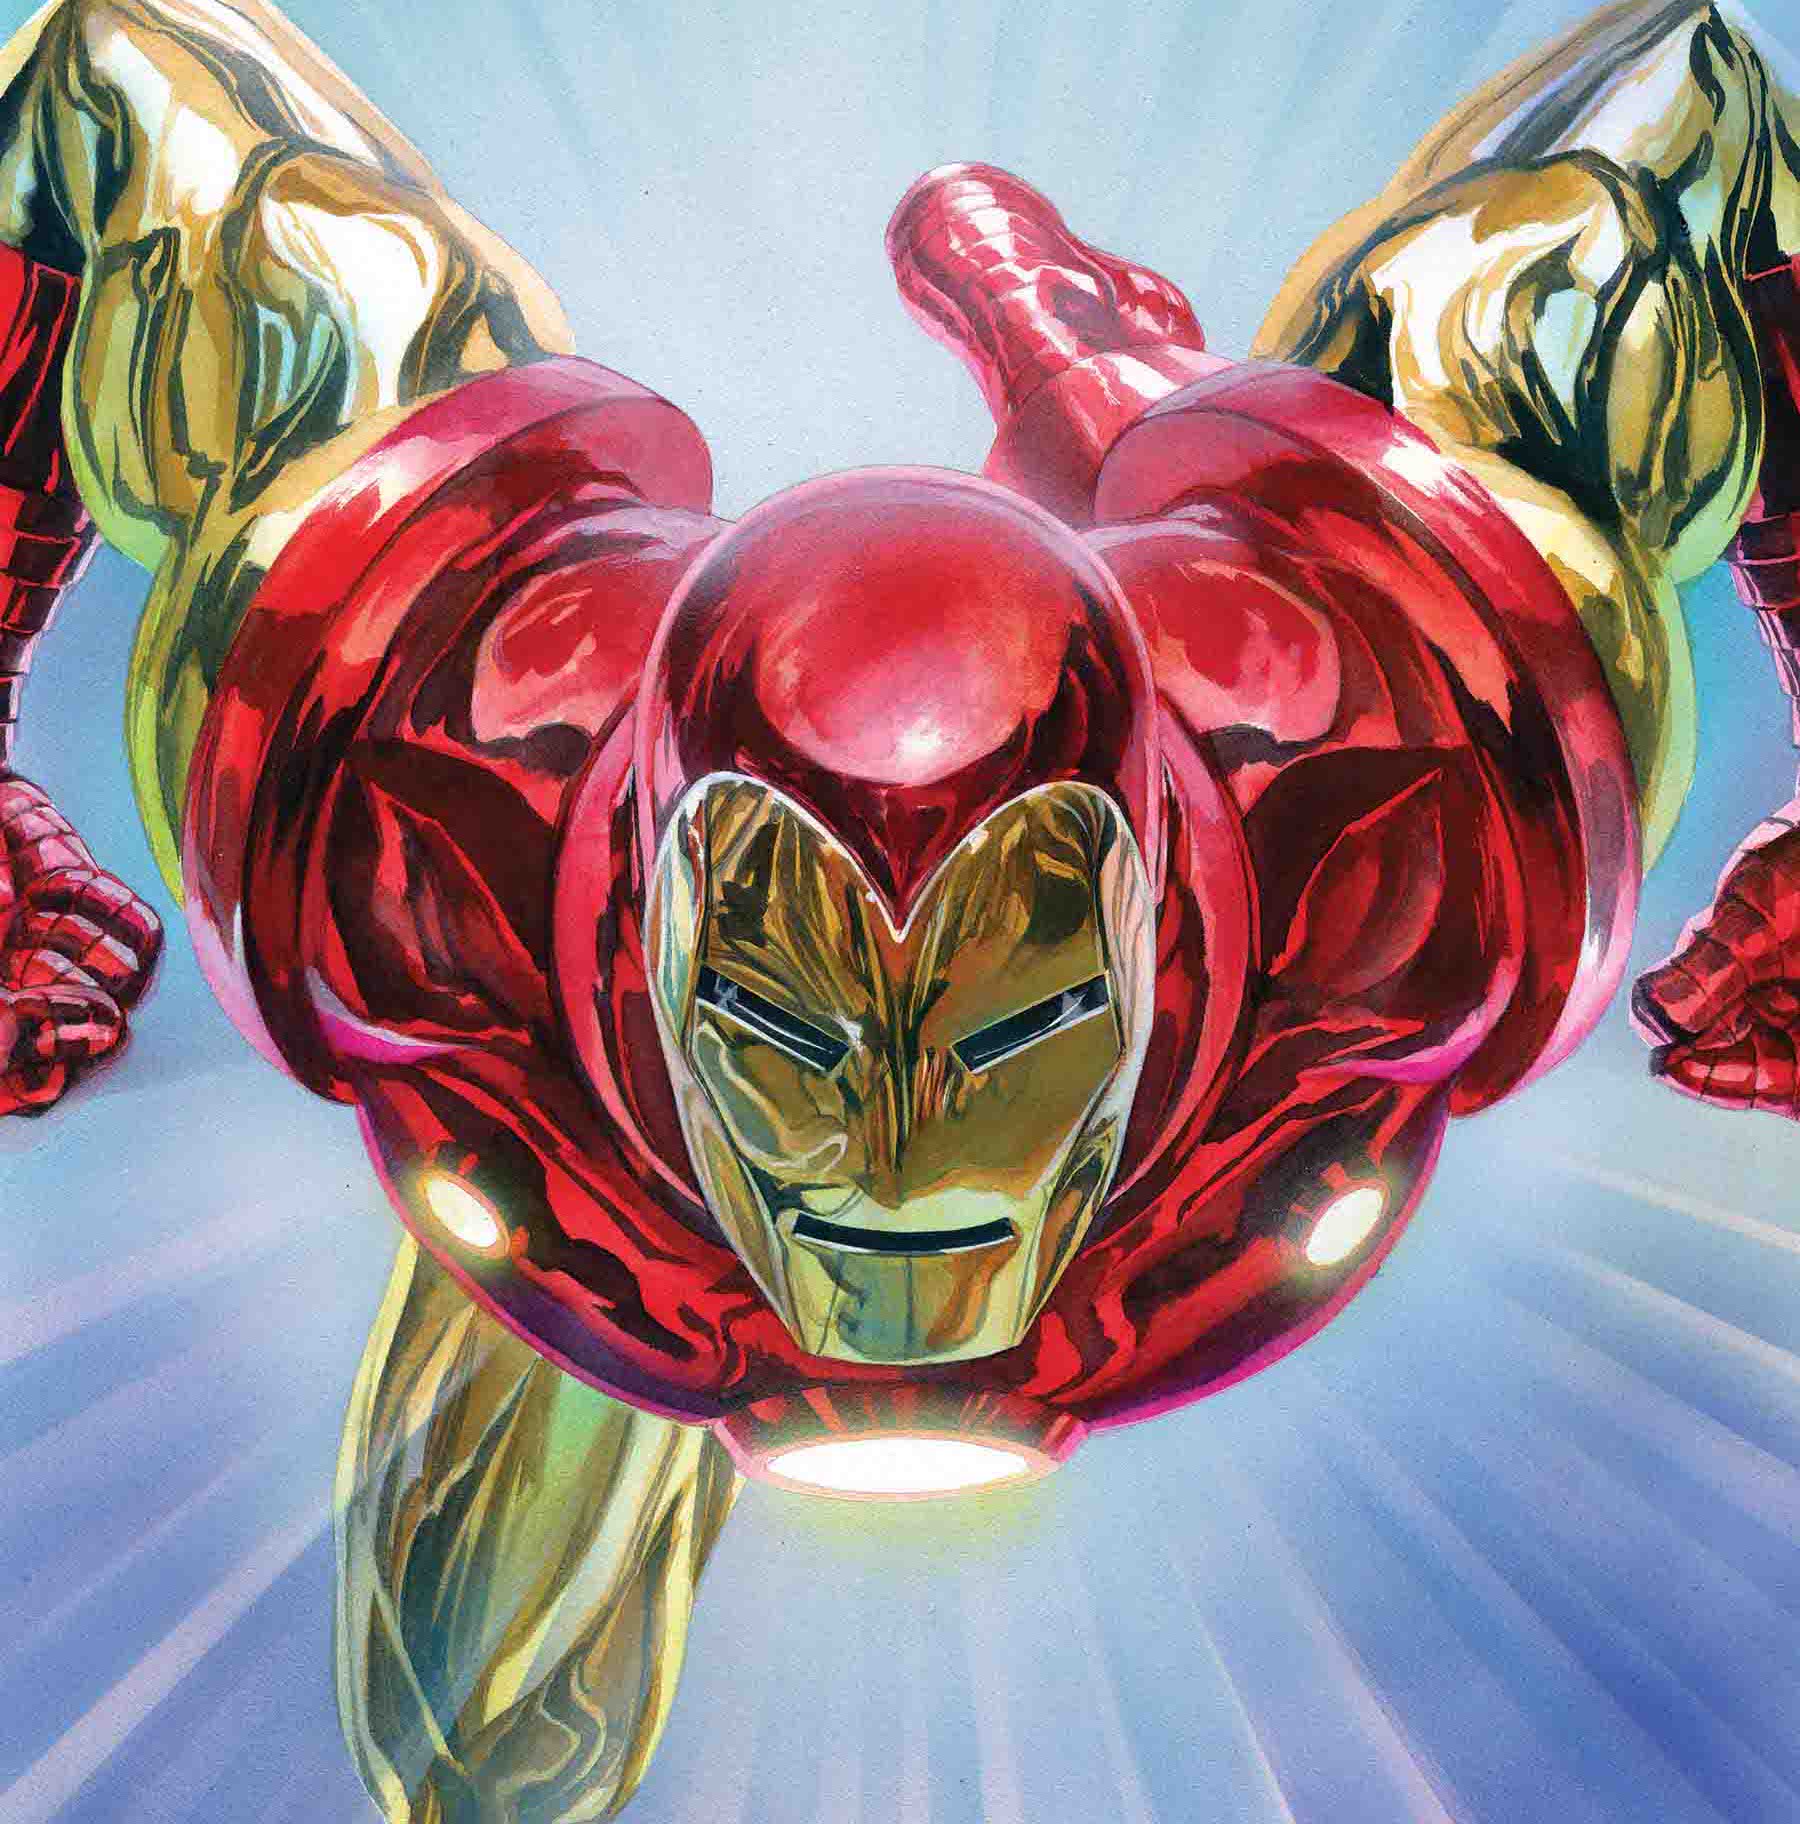 'Tony Stark: Iron Man #1' review: Fun and inventive just as Tony Stark should be